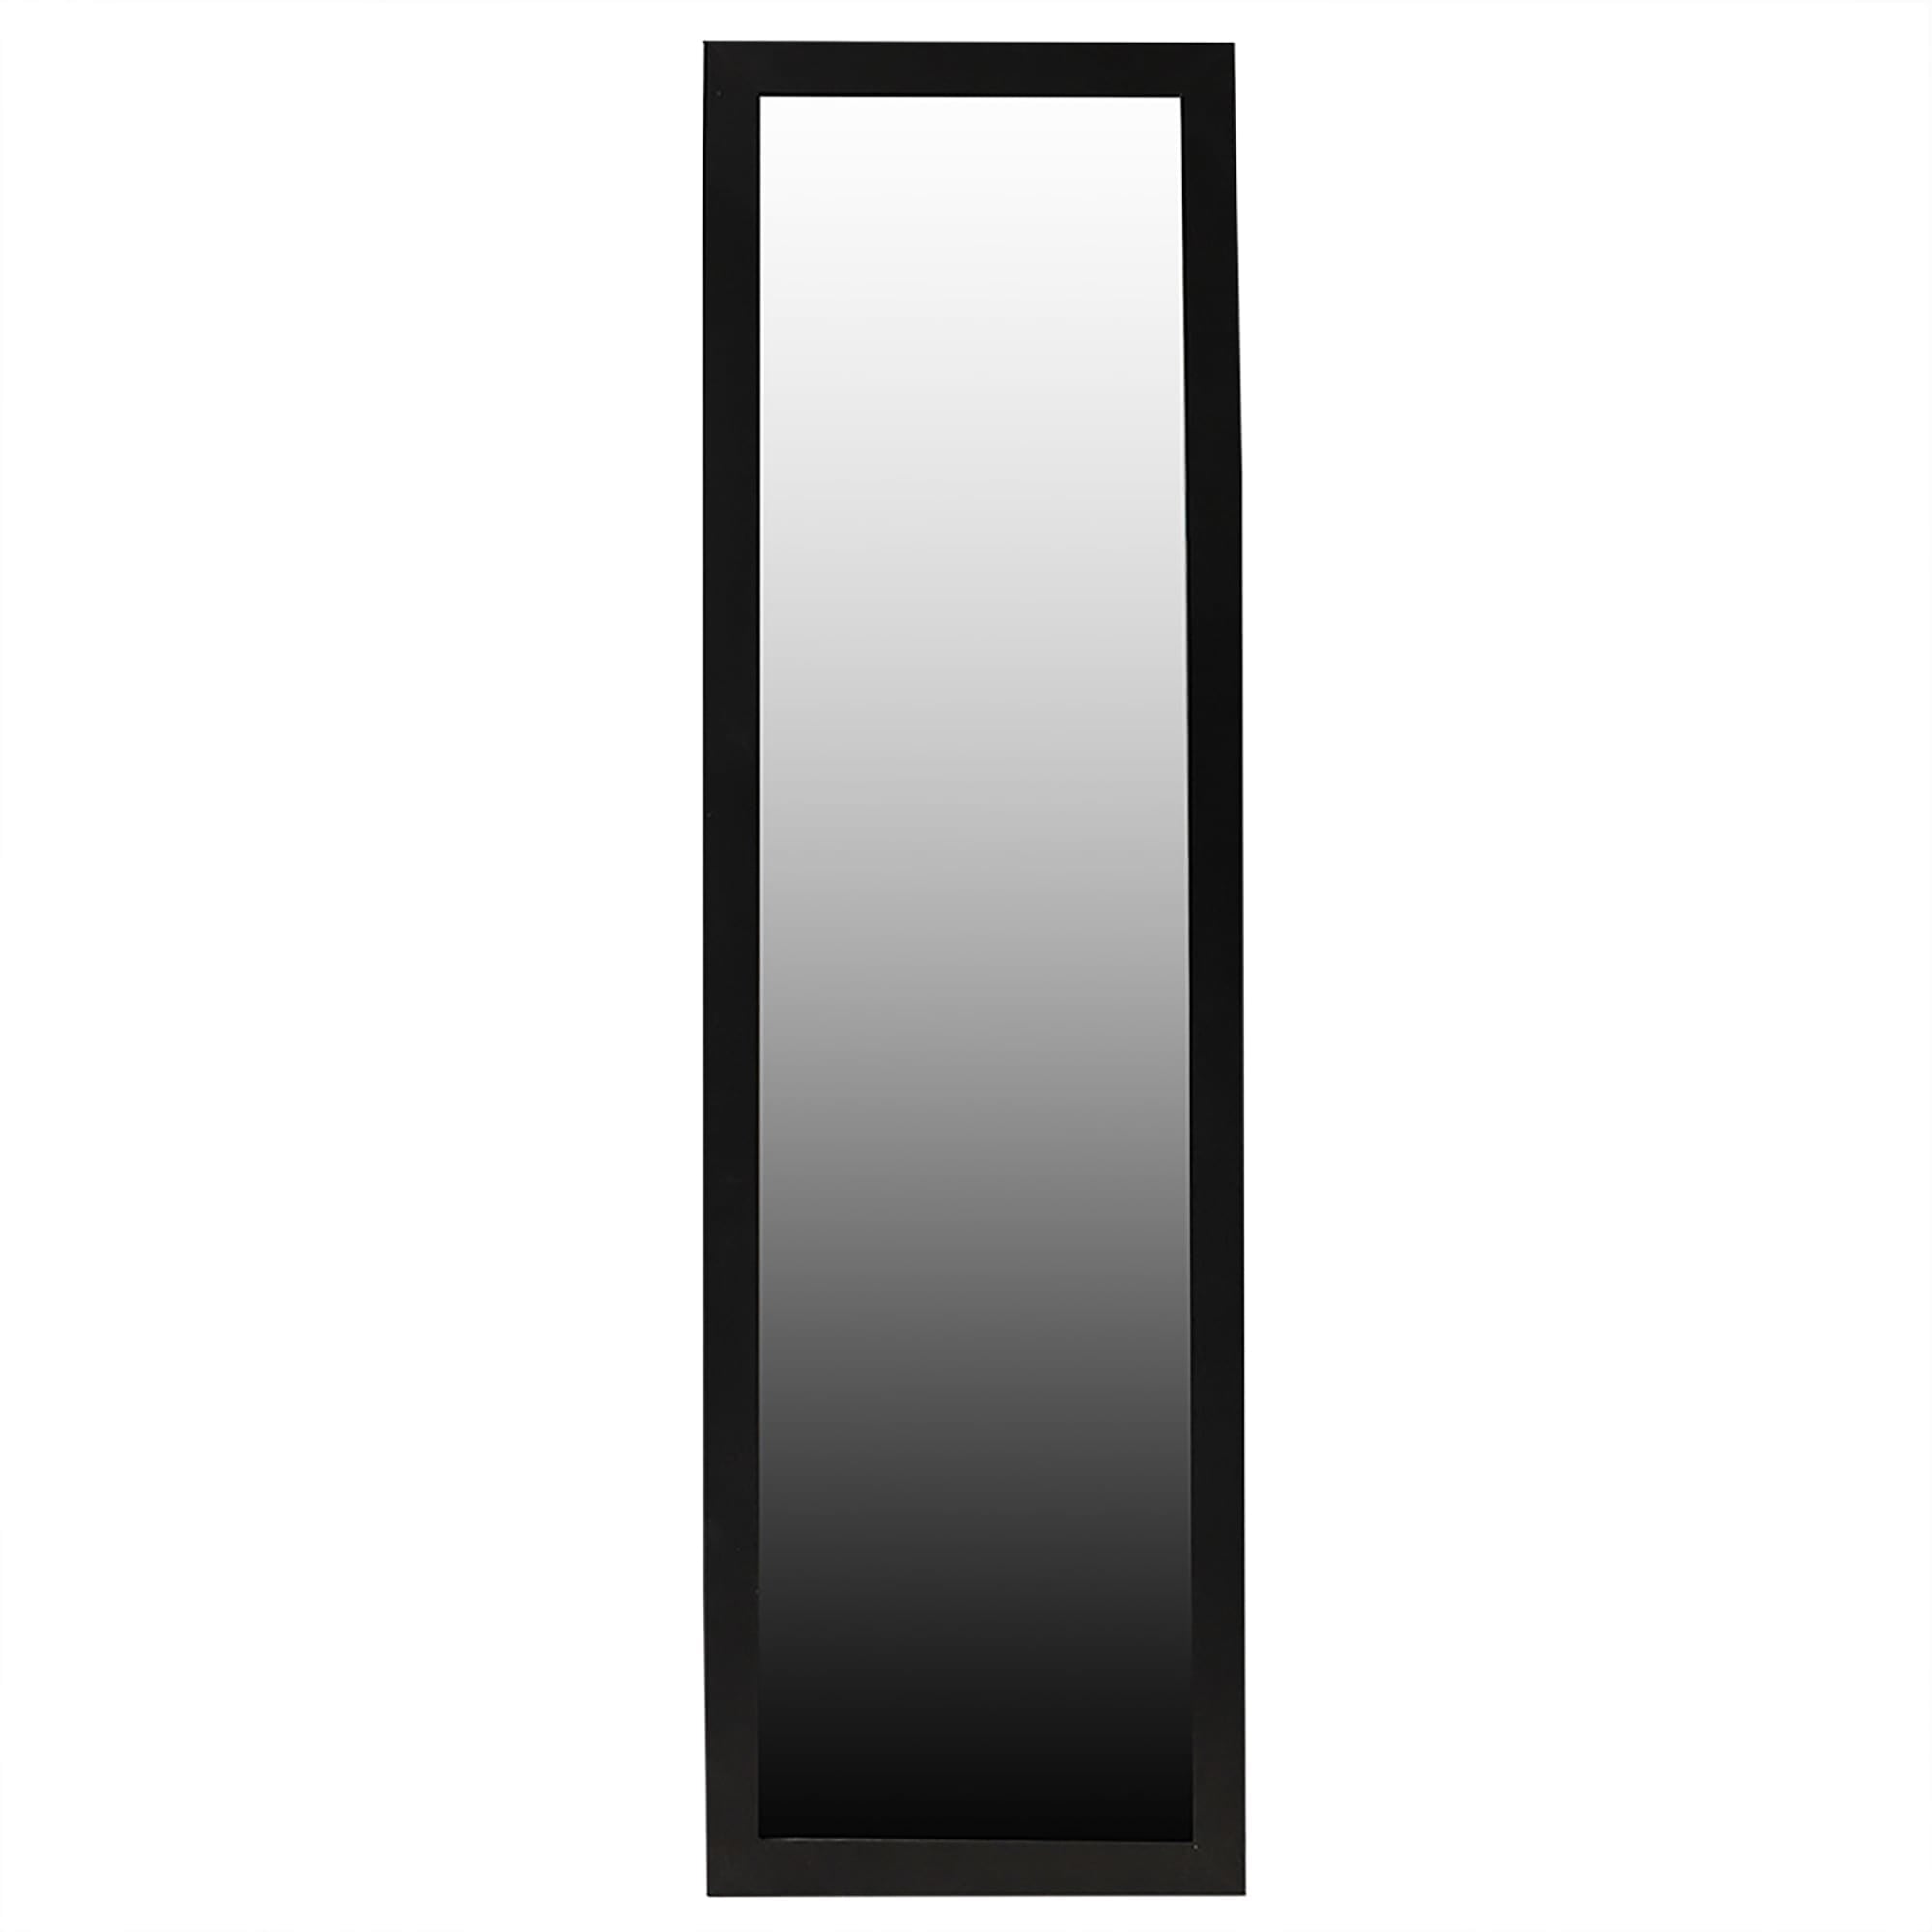 Home Basics Easel Back Full Length Mirror with MDF Frame, Black $15.00 EACH, CASE PACK OF 6